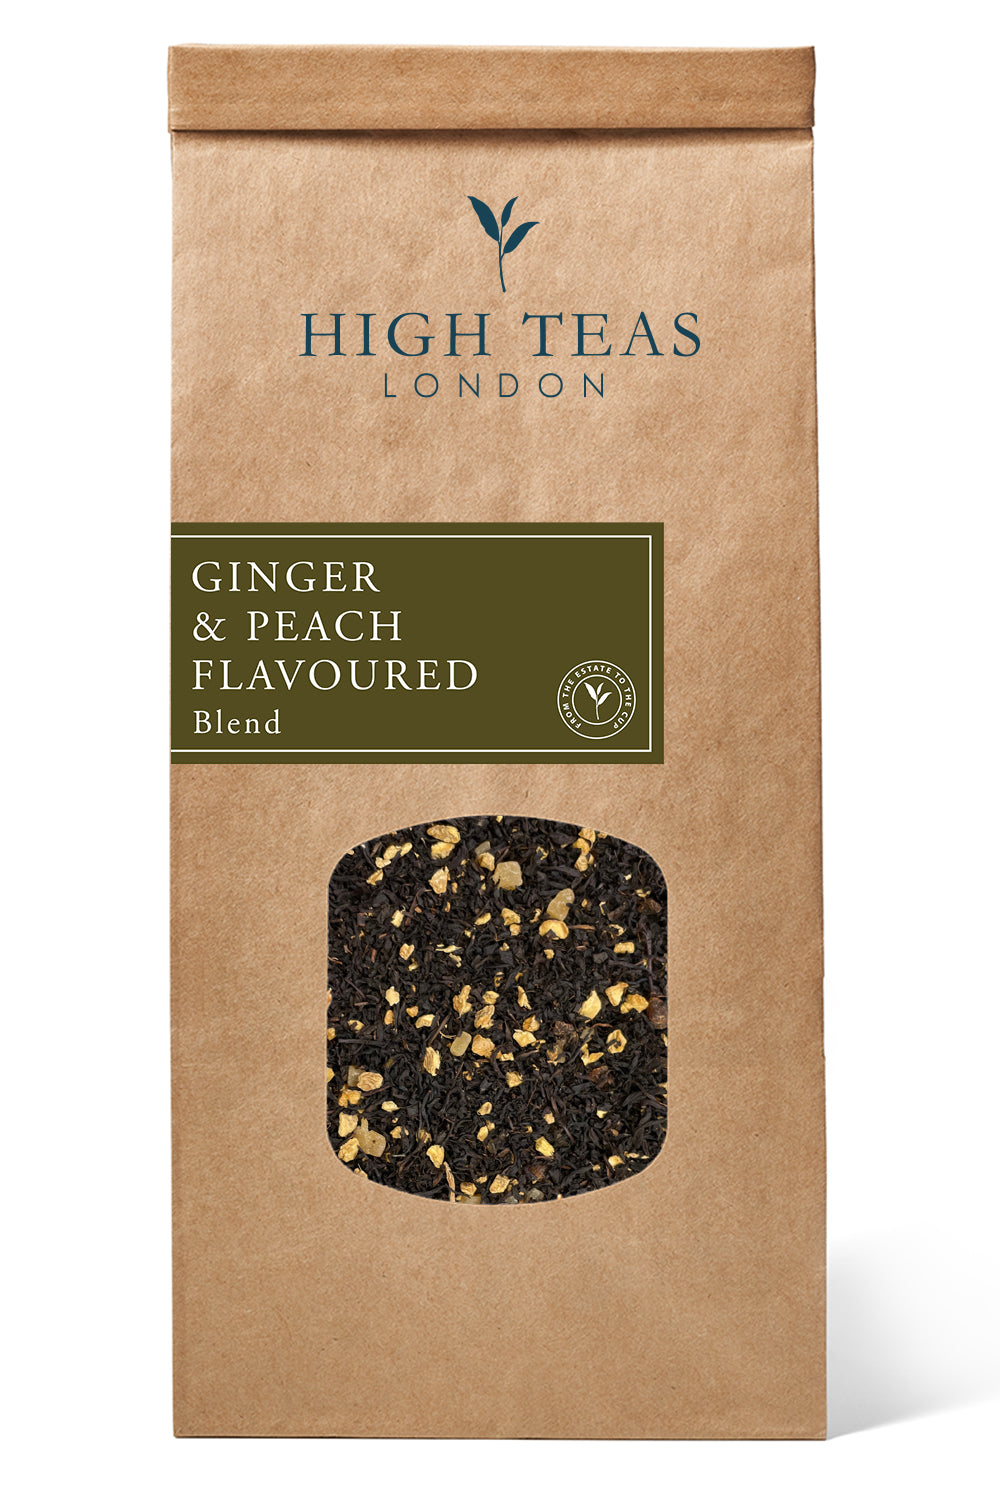 Ginger & Peach flavoured black tea-250g-Loose Leaf Tea-High Teas